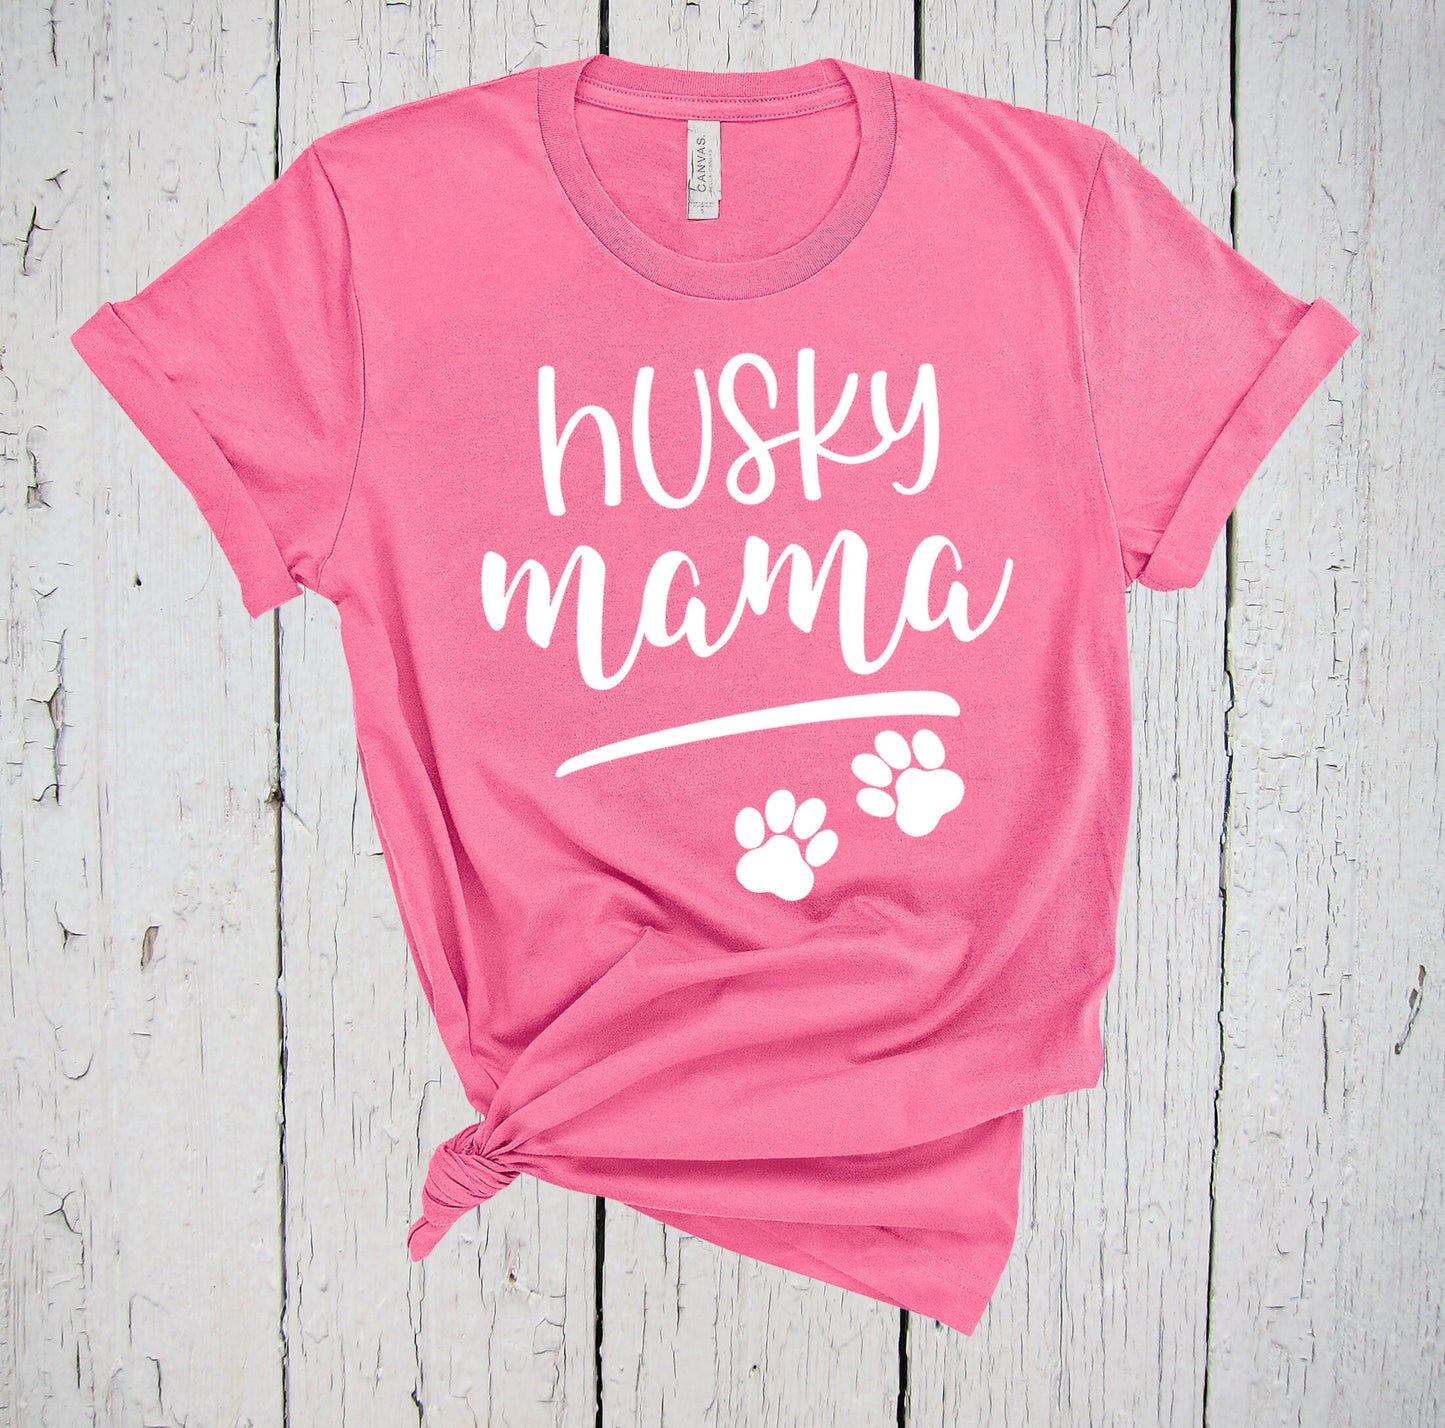 Husky Mama, Fur Mama Shirt, Siberian Husky Shirt, Husky Mom Shirt, Dog Mom Shirt, Husky Dog Shirt, Husky Gifts, Husky Shirt, Paw Print Shirt